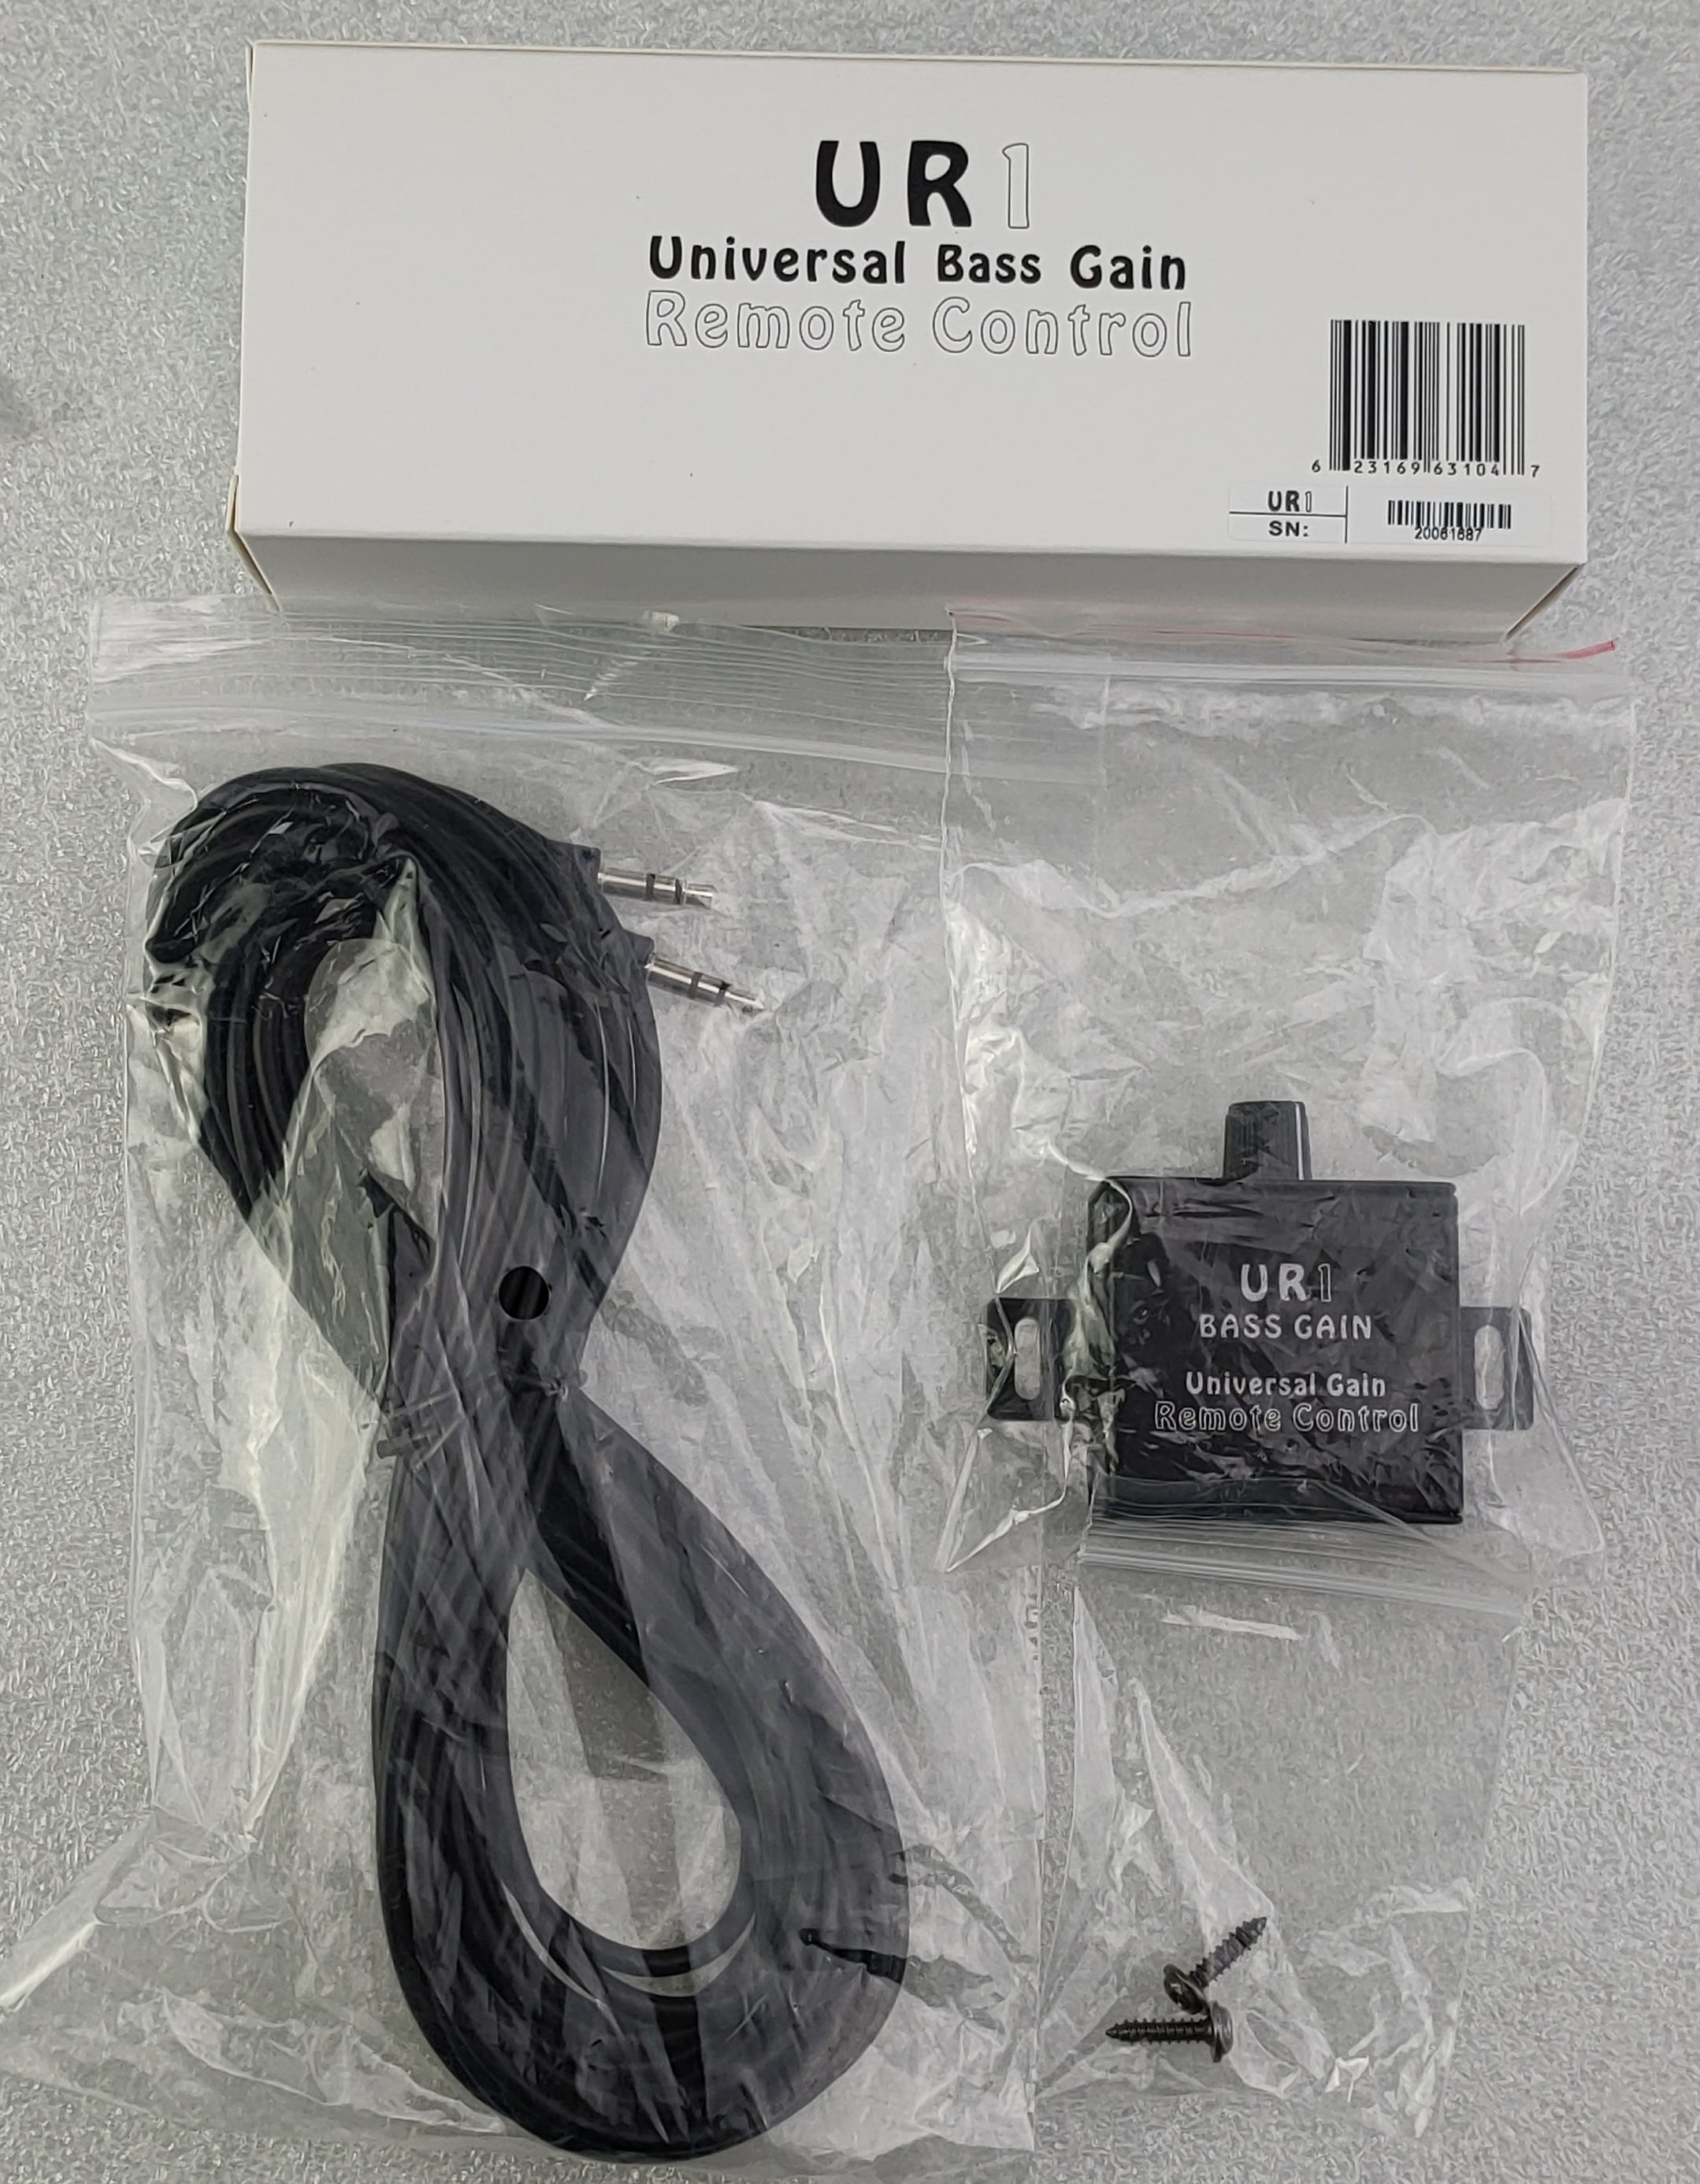 UR1 - Universal Amplifier